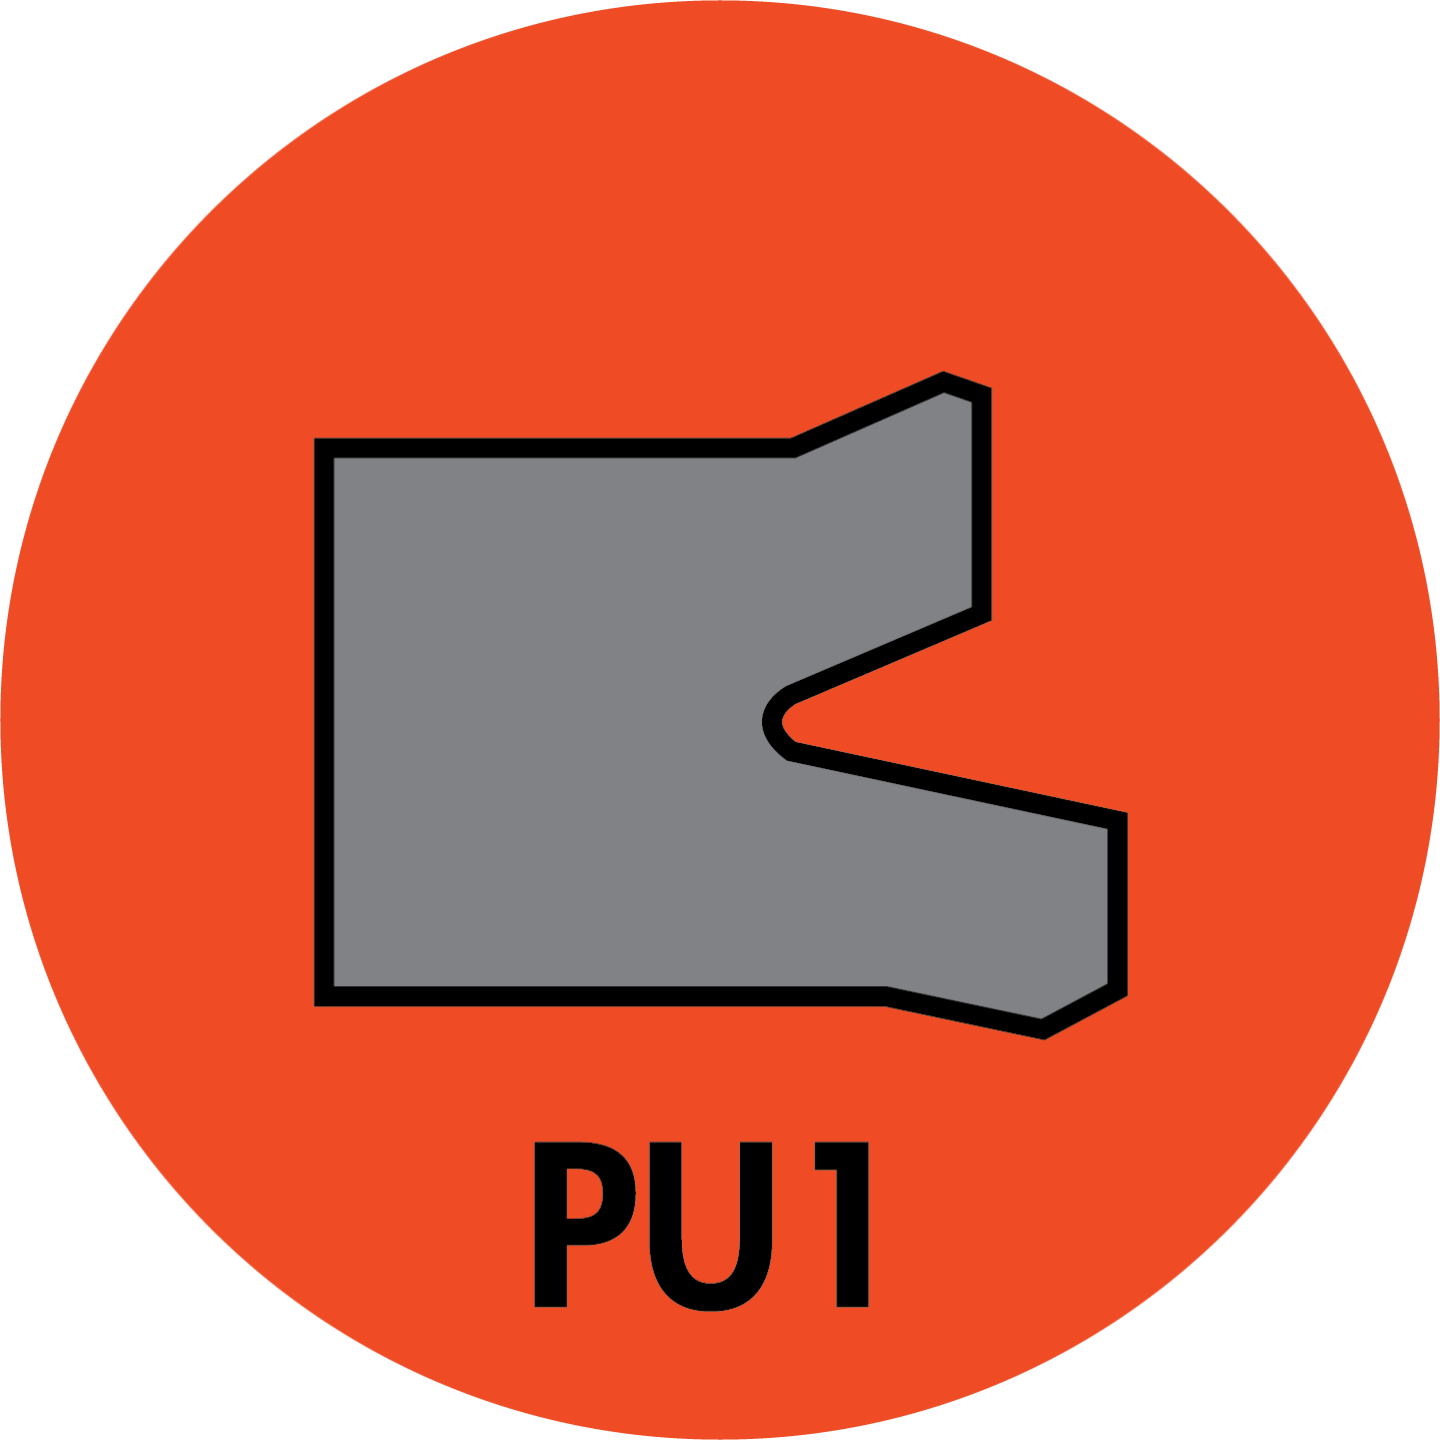 PU1 PISTON U-CUP (AU/P92E) - PU1-37506000-625-P92E Image 1